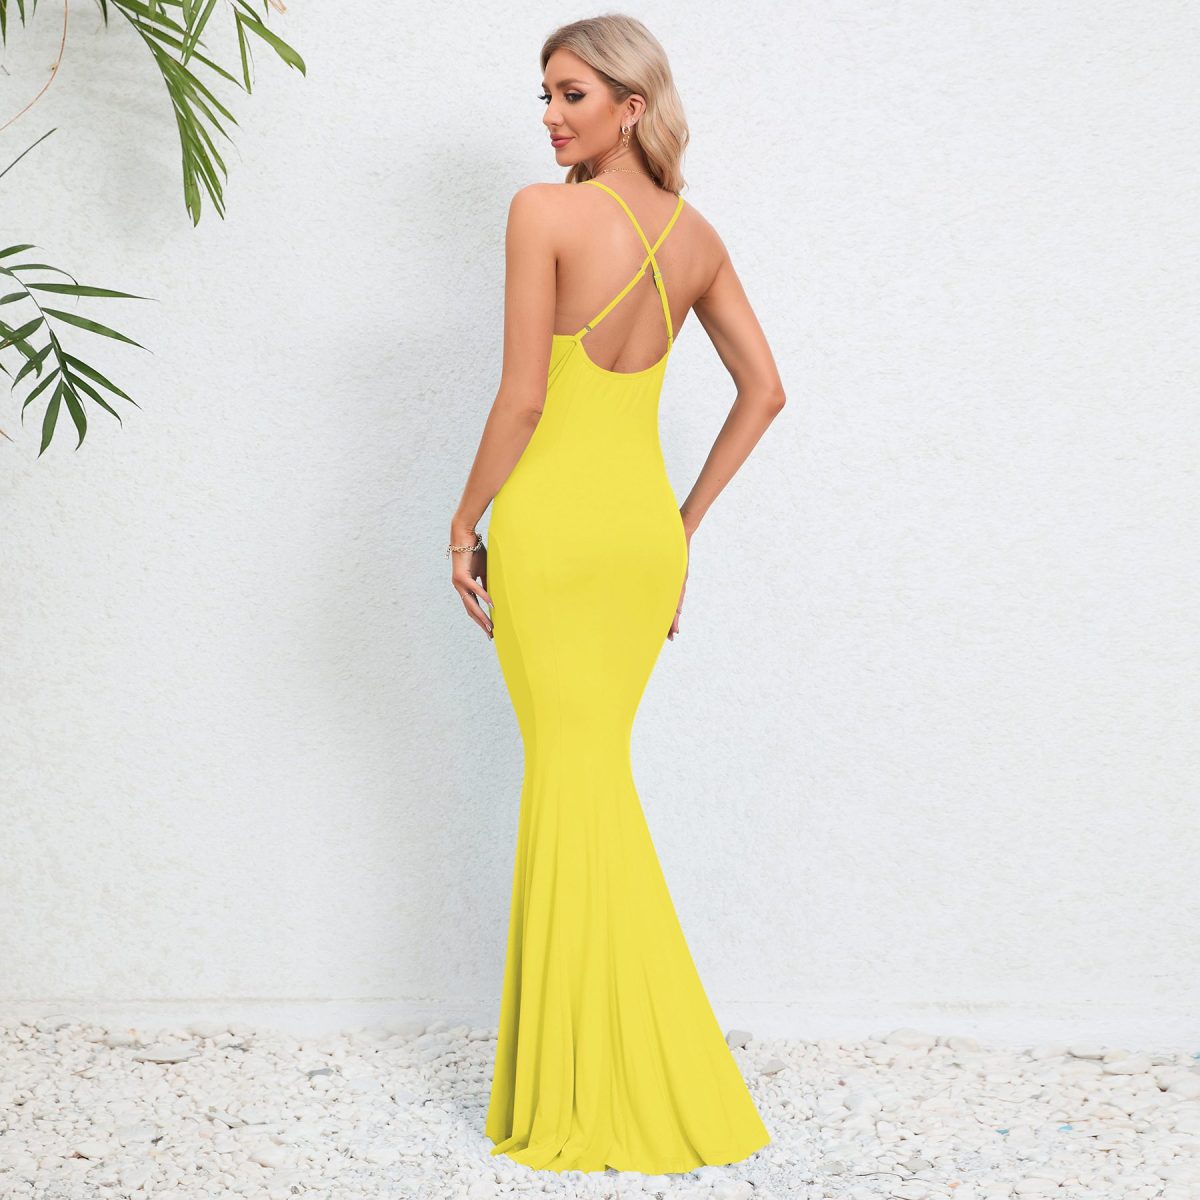 Sexy Slim Fit Fishtail Dress in Dresses